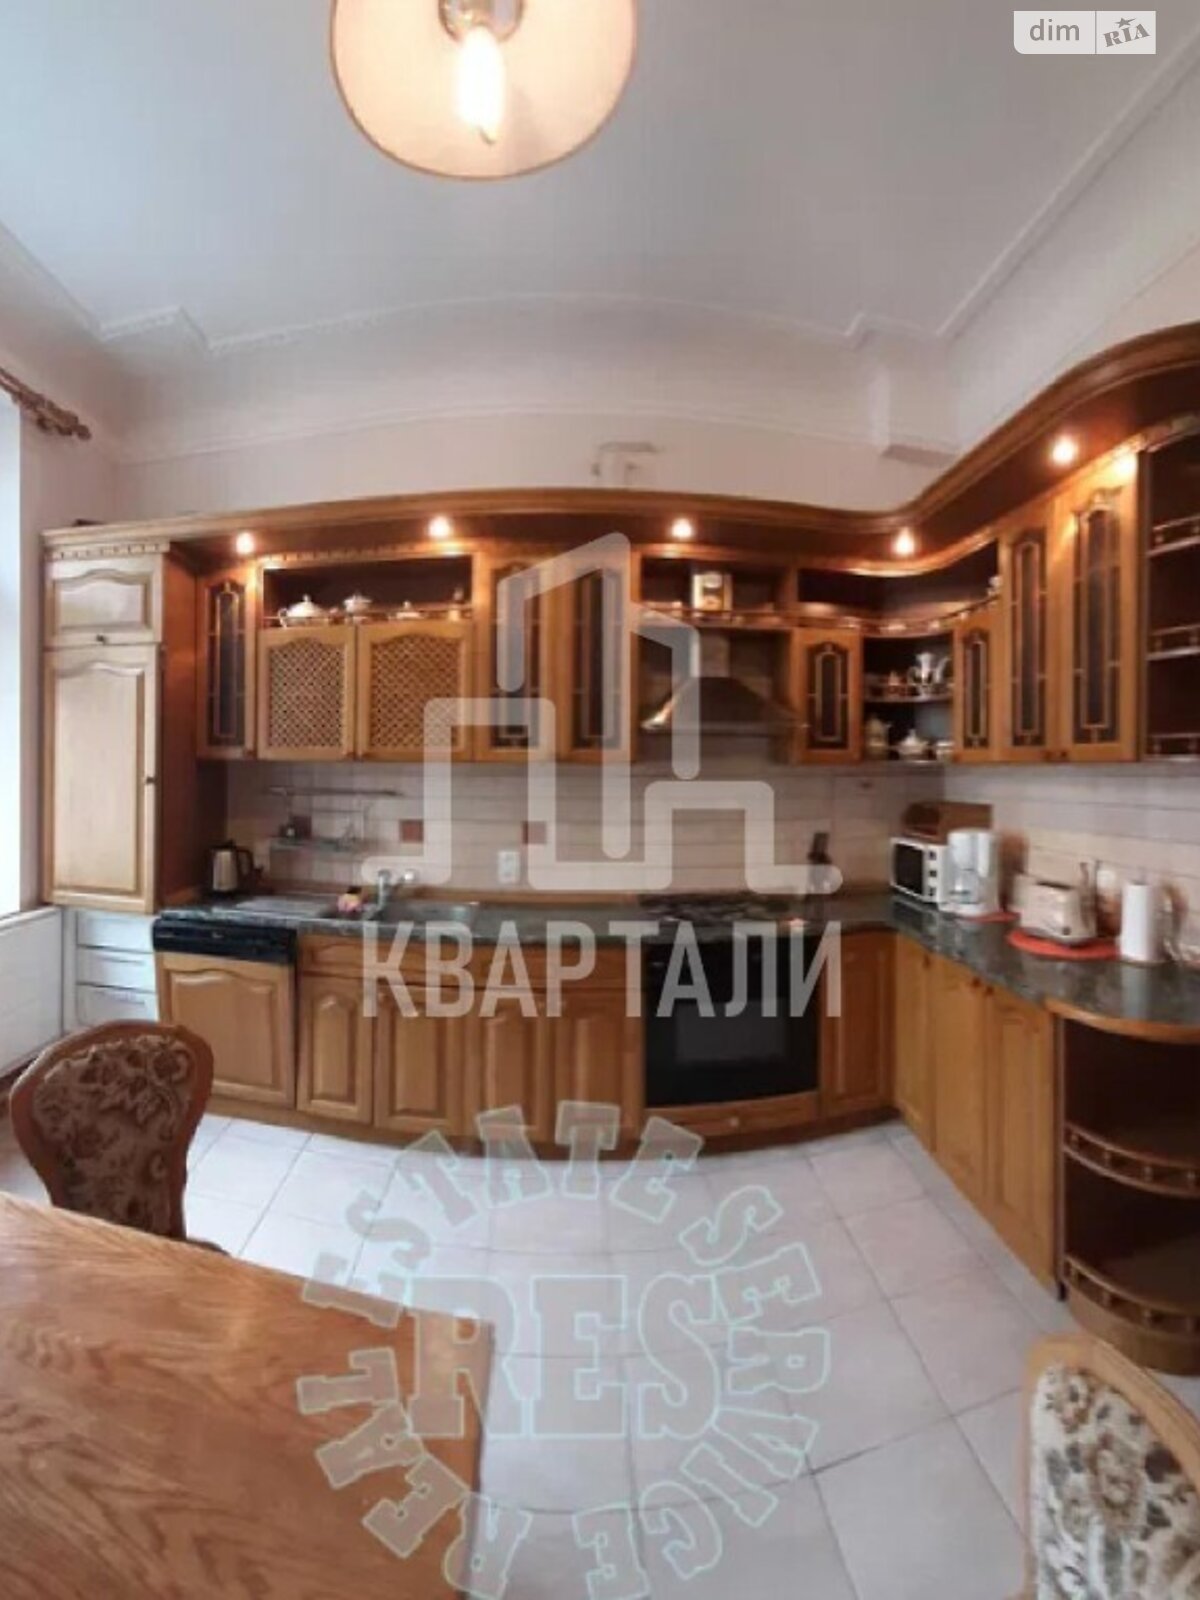 Продажа трехкомнатной квартиры в Киеве, на ул. Крещатик 23, район Центр фото 1